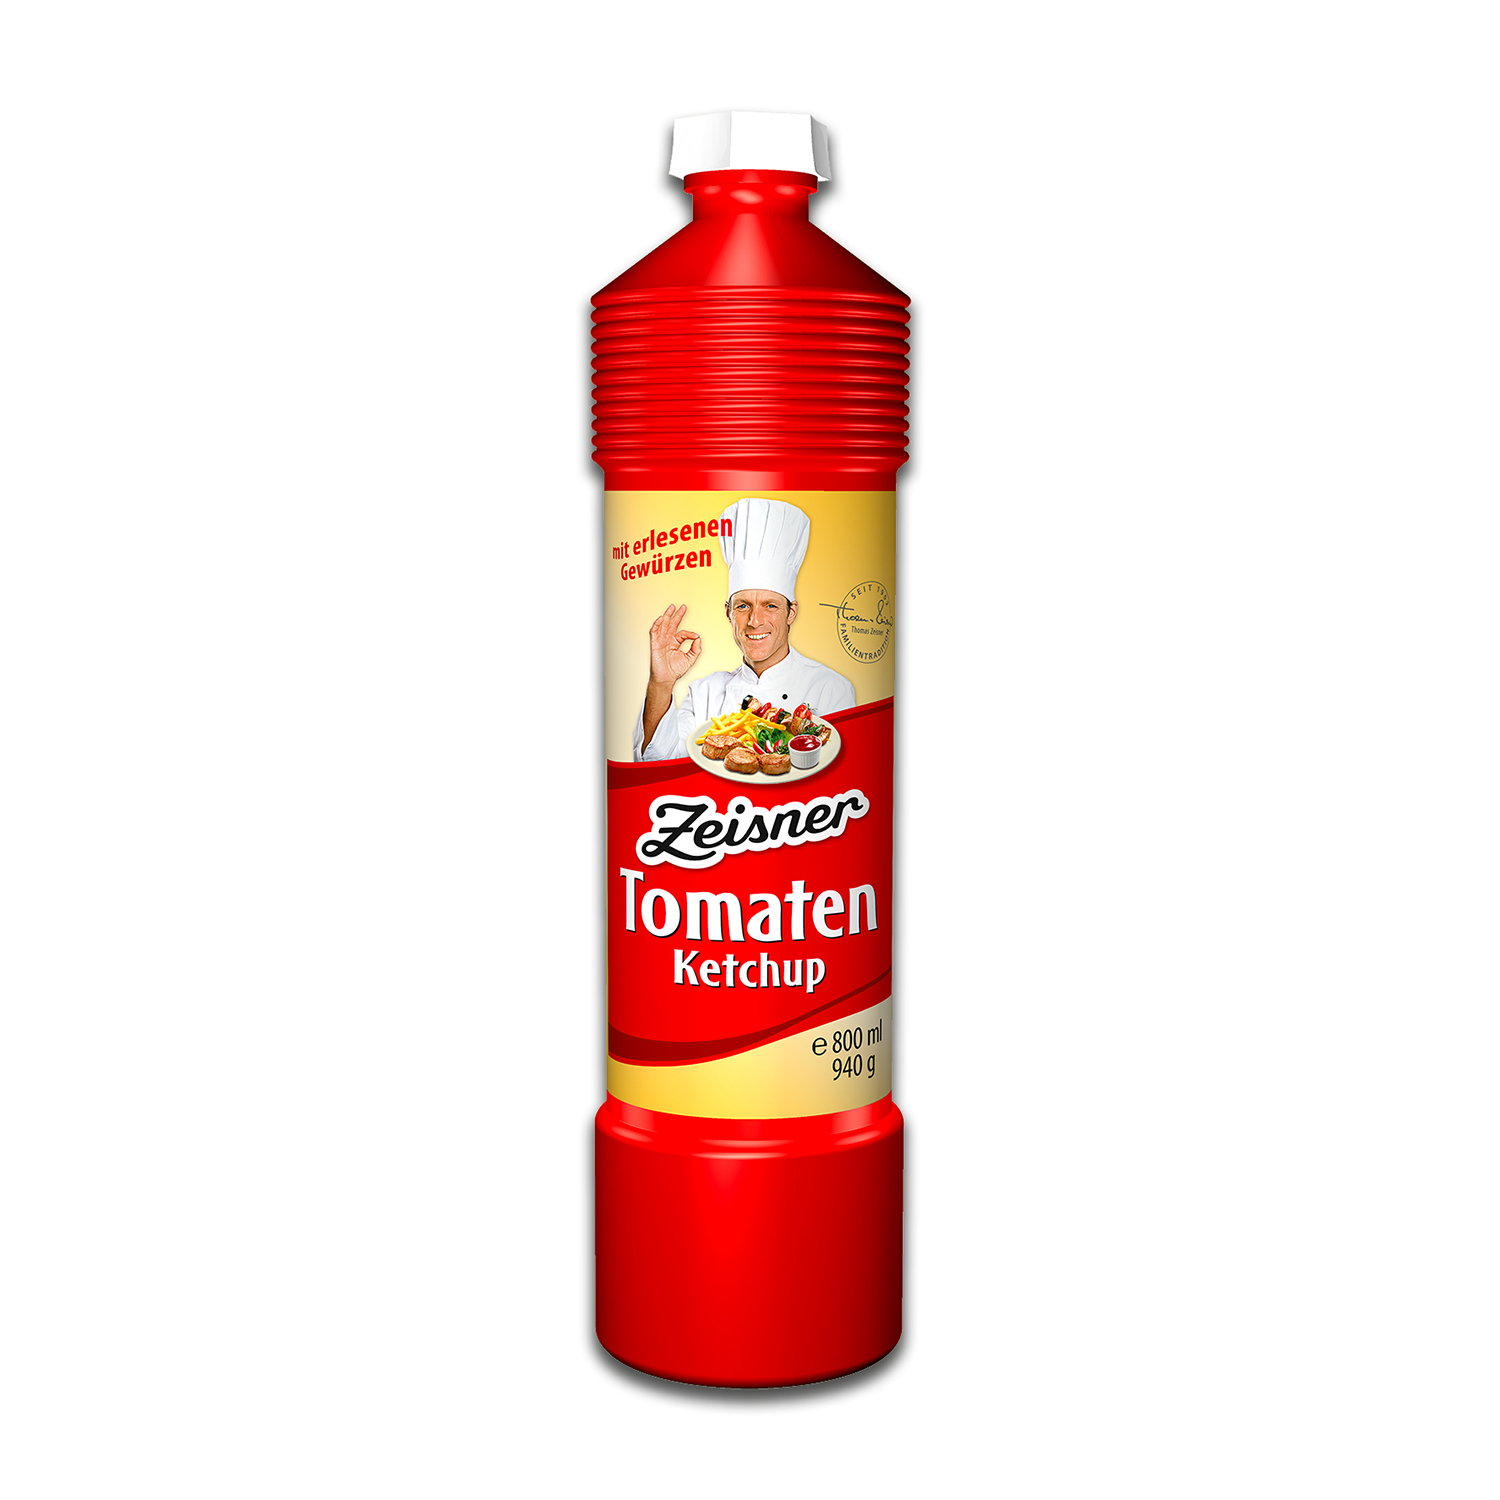 Zeisner Tomaten Ketchup, 800ml online kaufen - Pepperworld Hot Shop